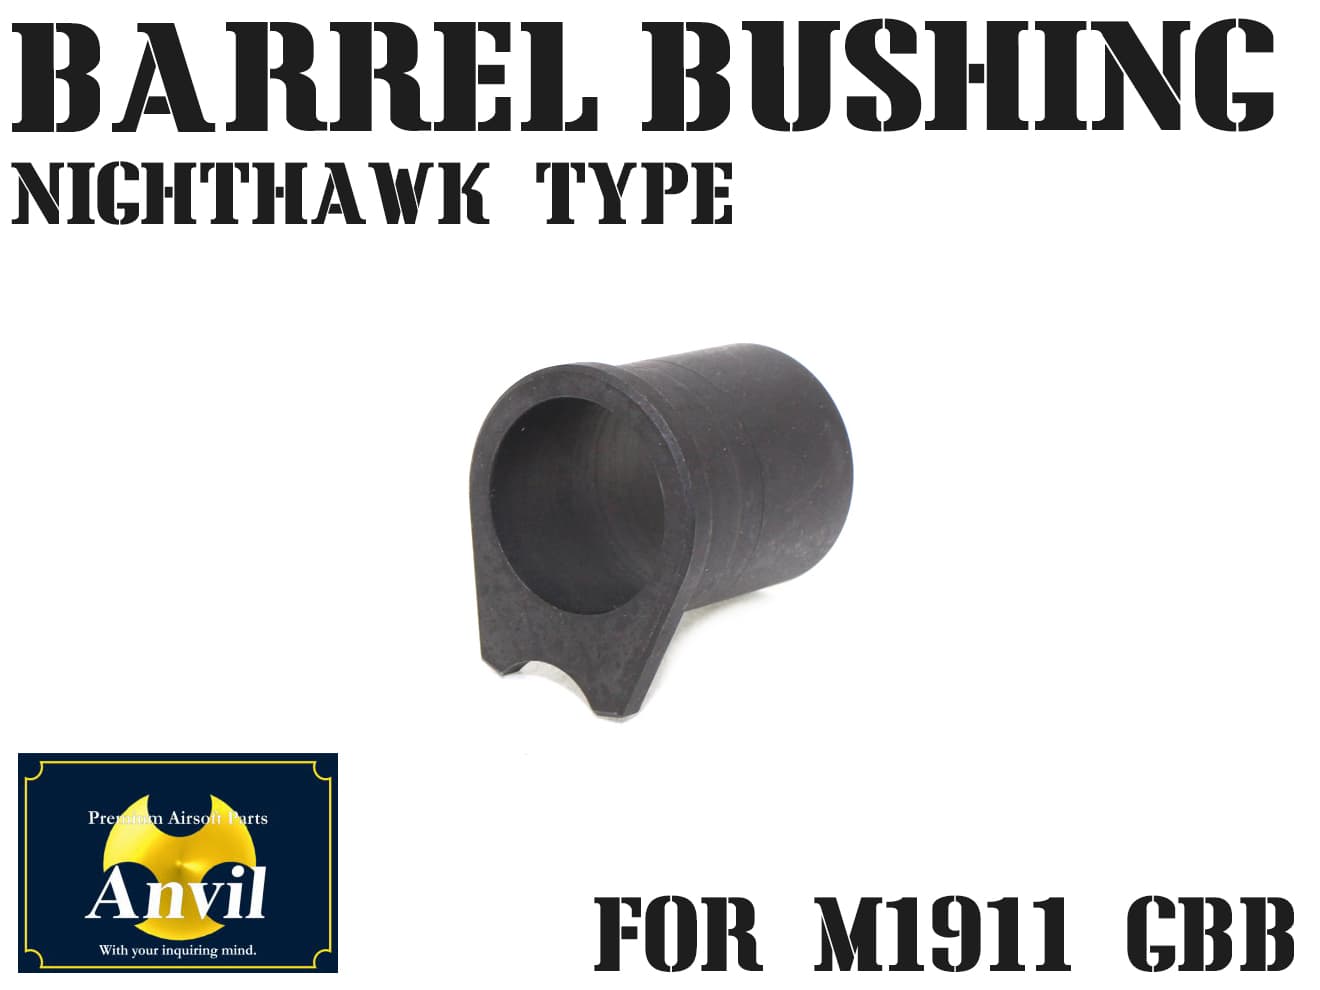 TM-GMP-B04-SB　Anvil M1911 バレルブッシング Nighthawkタイプ ブラック